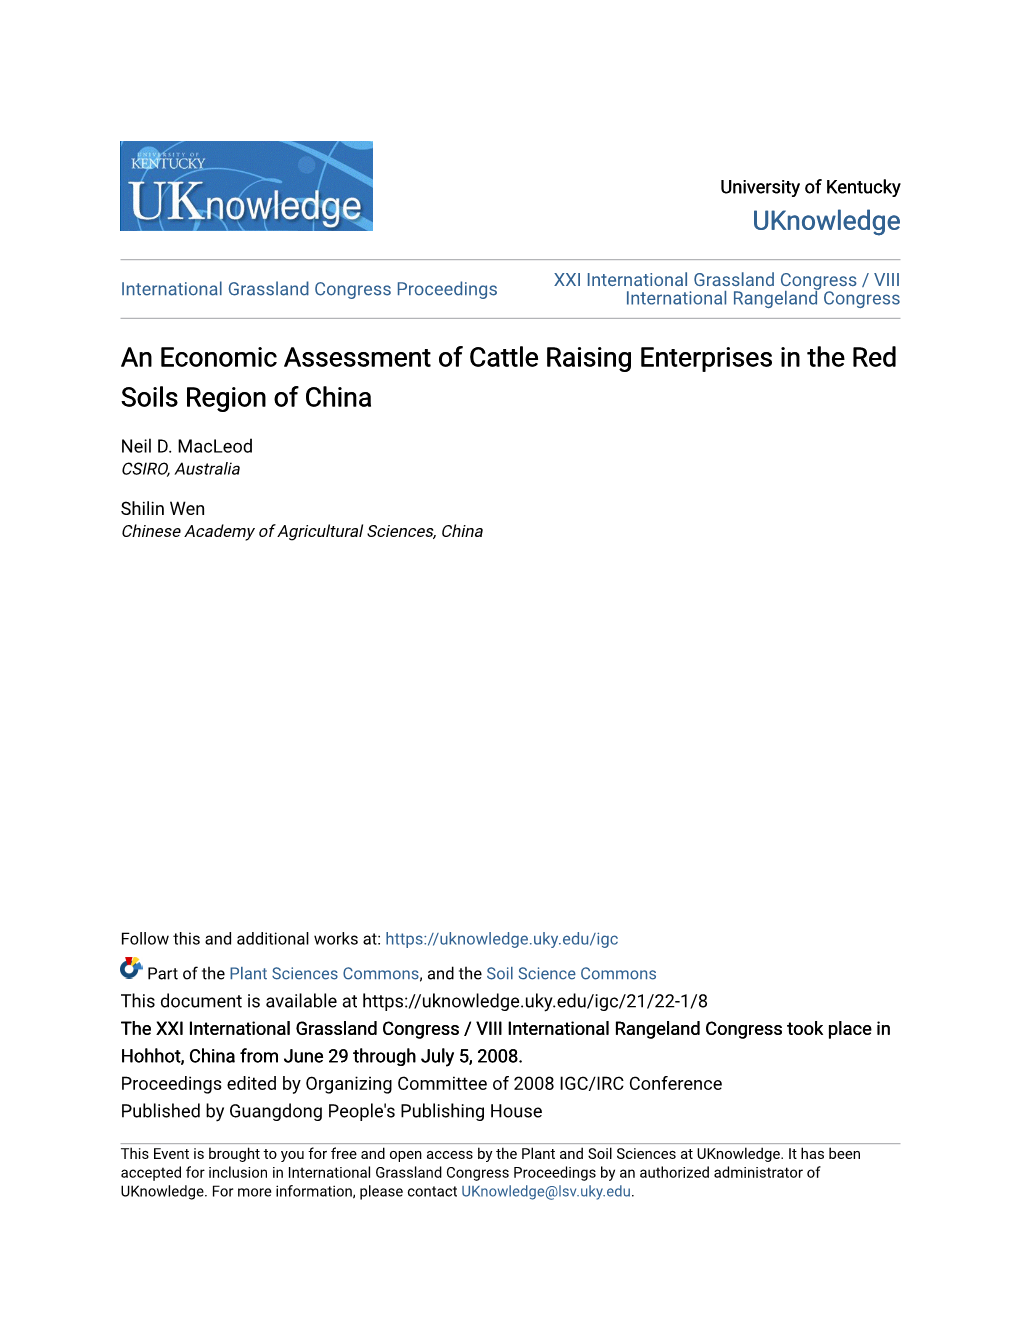 An Economic Assessment of Cattle Raising Enterprises in the Red Soils Region of China